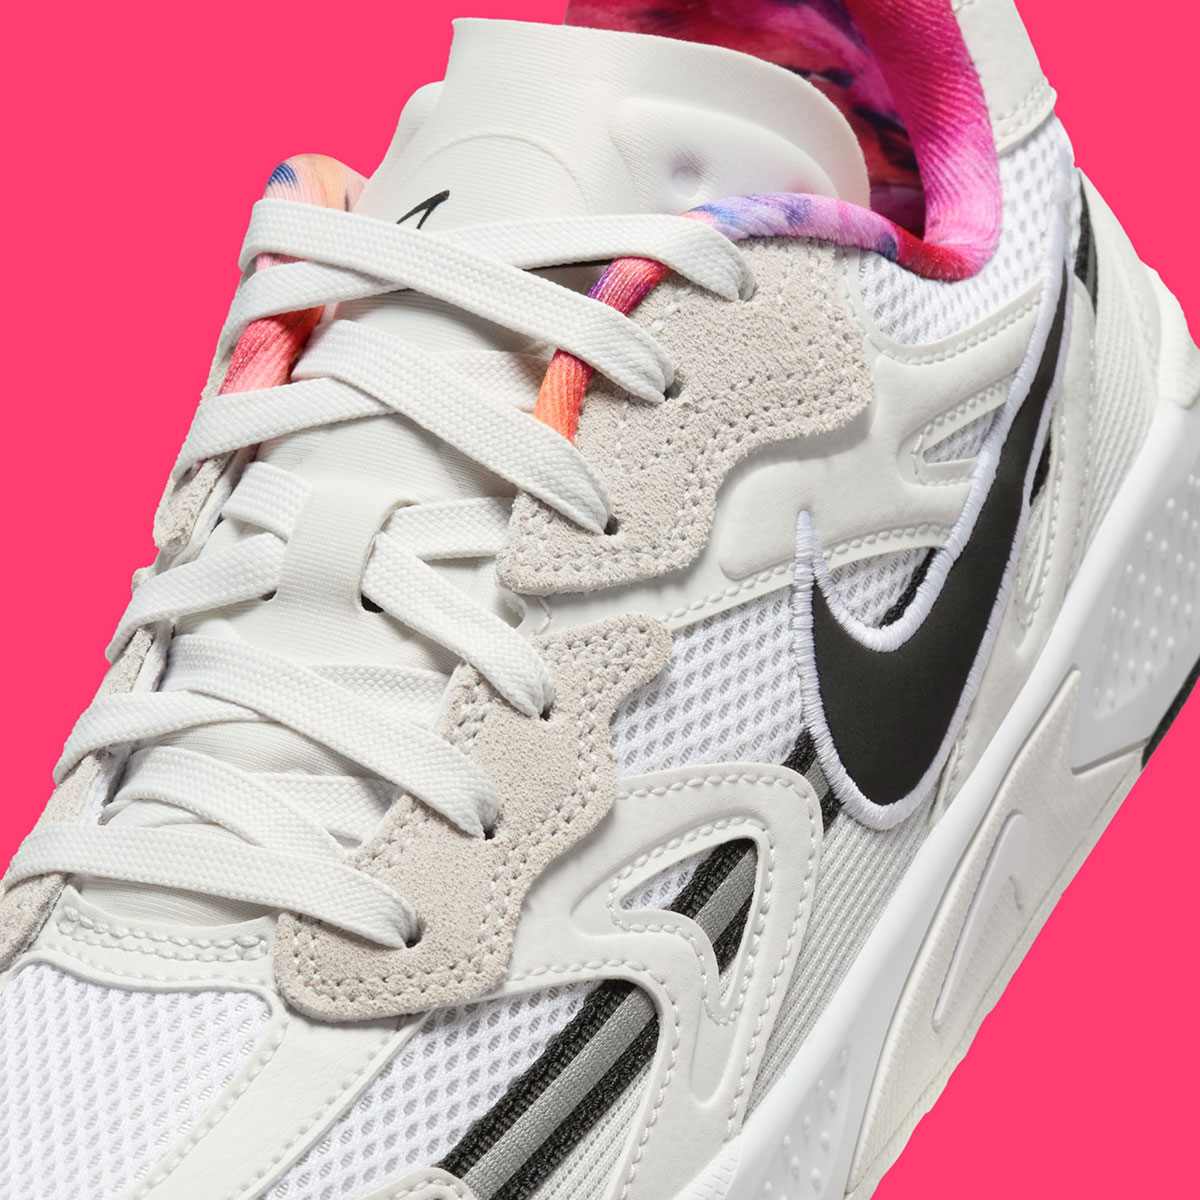 Futura Nike Jam Breakdancing Shoe Release Date 2